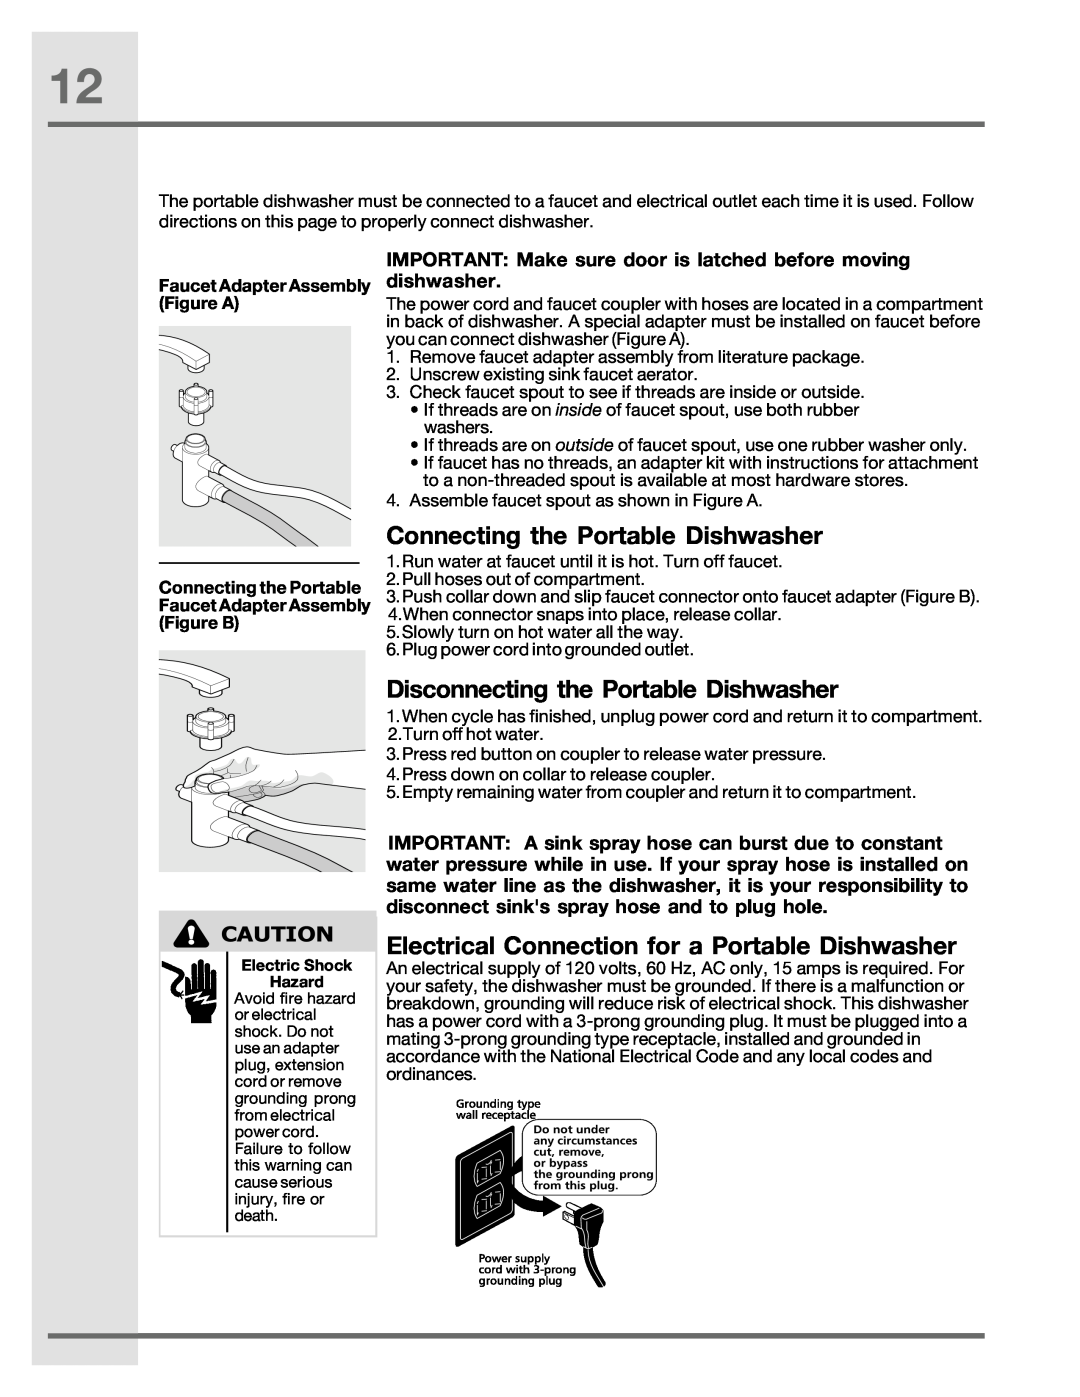 Electrolux 6.75E+11, 2001/05 manual Connecting the Portable Dishwasher, Disconnecting the Portable Dishwasher 